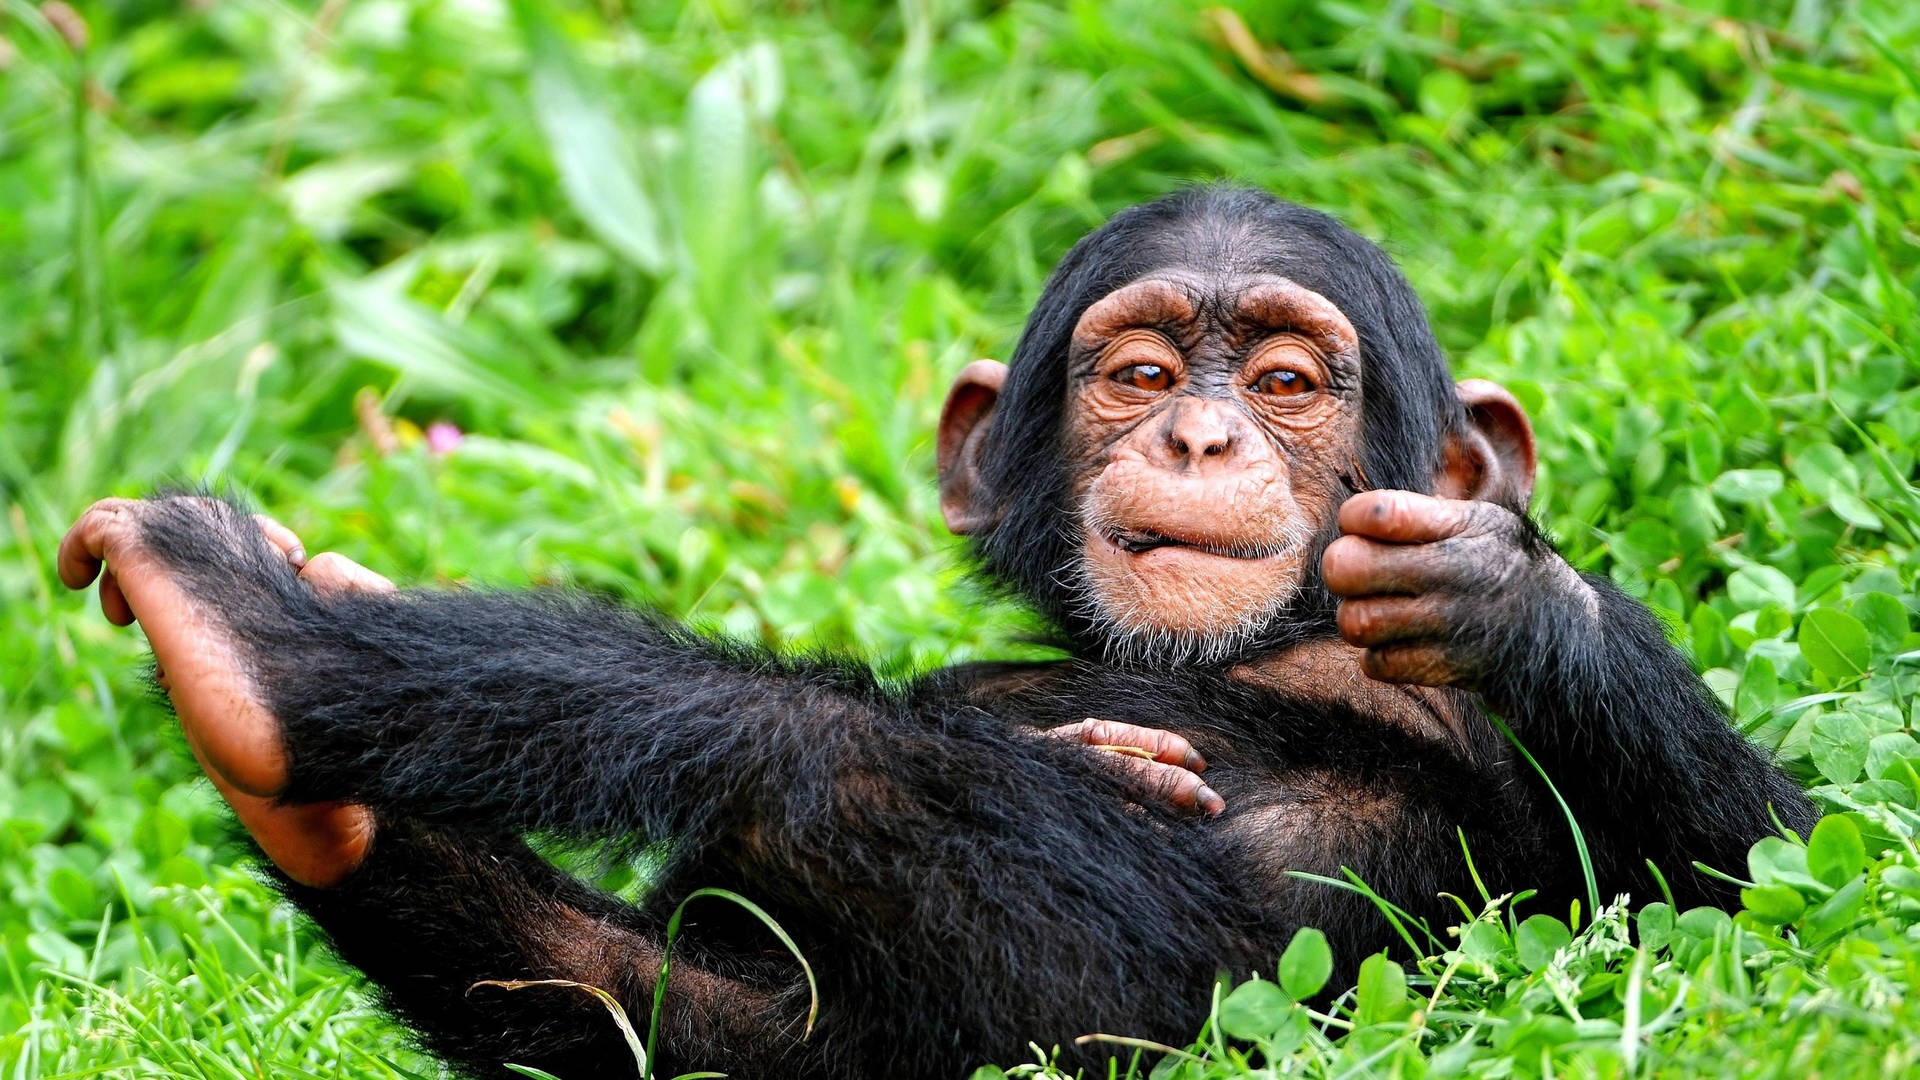 Baby Chimpanzee At Grassy Ground Background